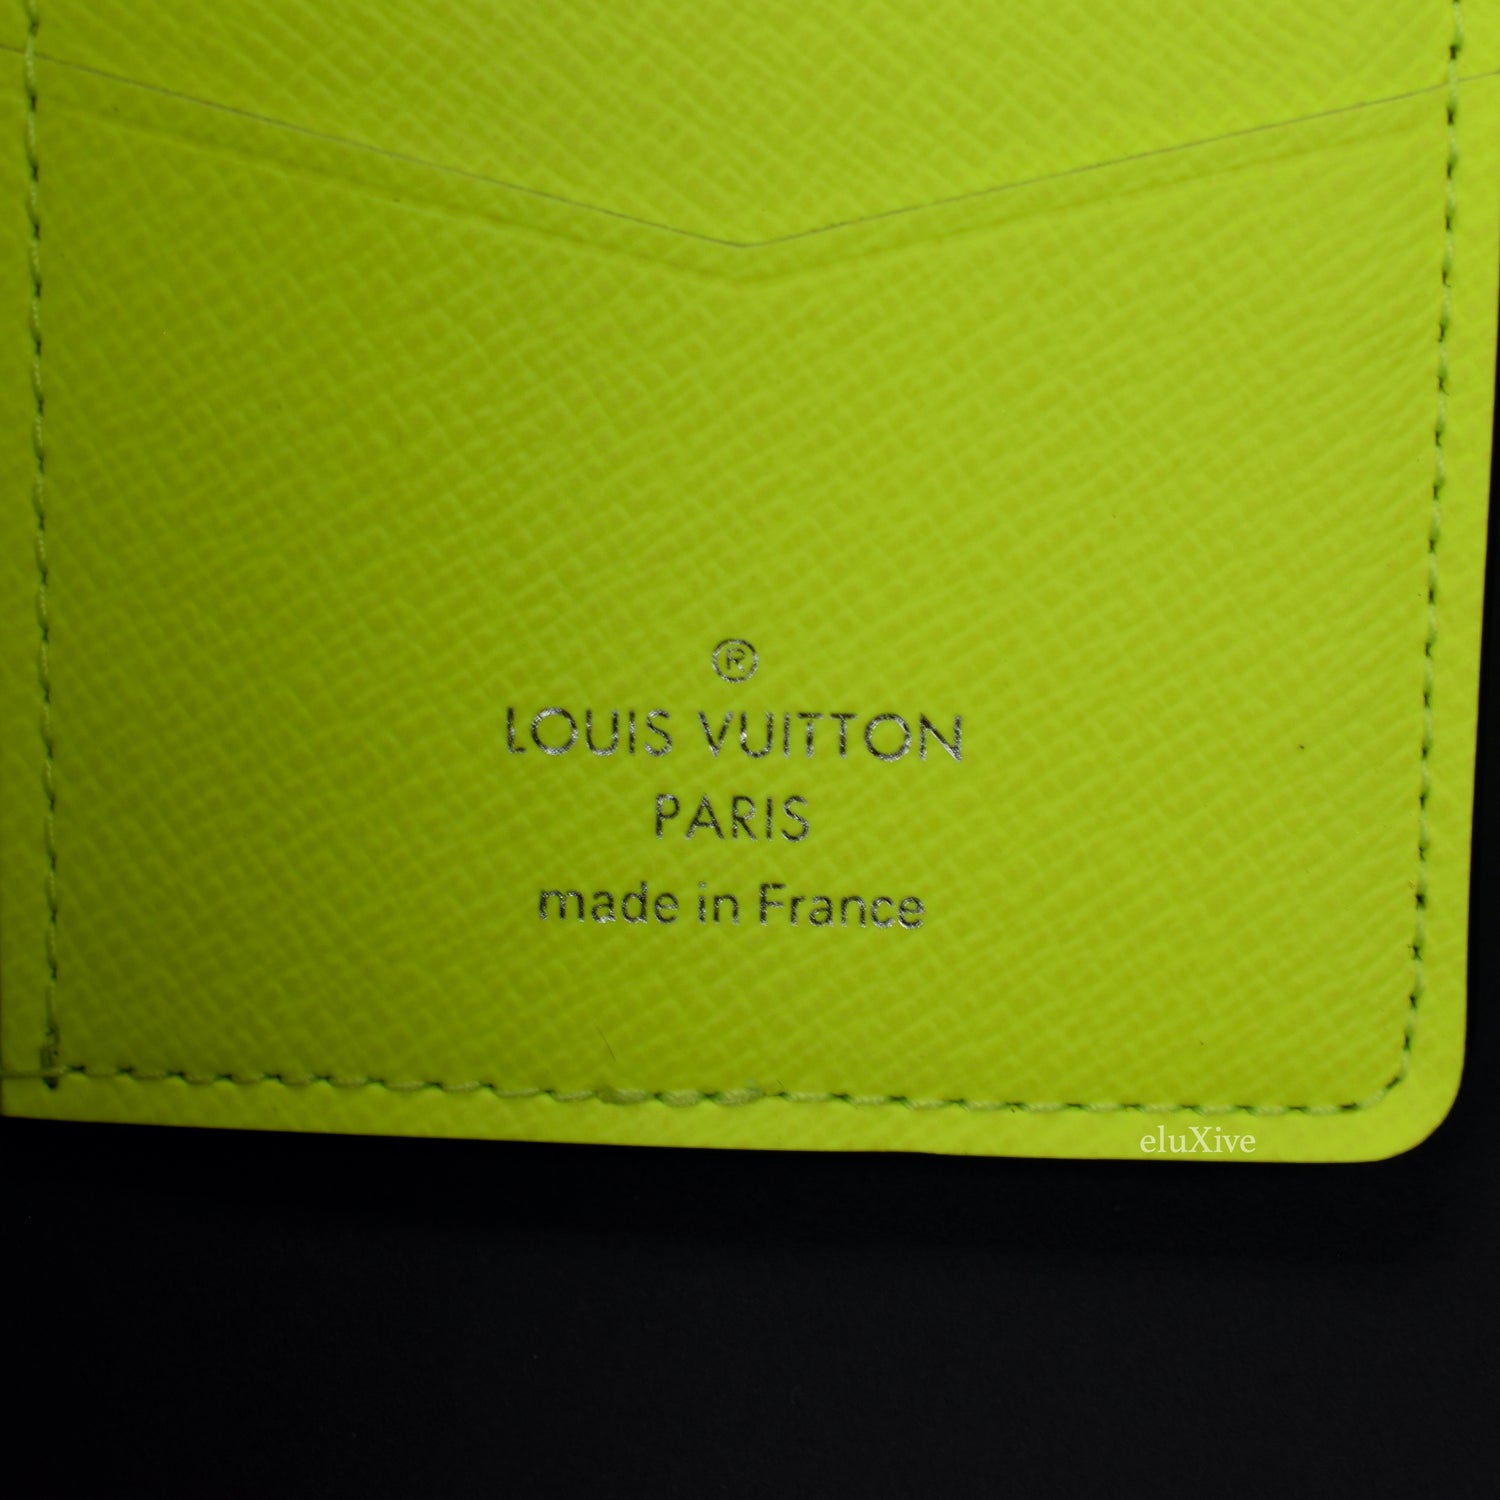 NWT Authentic Louis Vuitton Taigarama Monogram Multiple Wallet